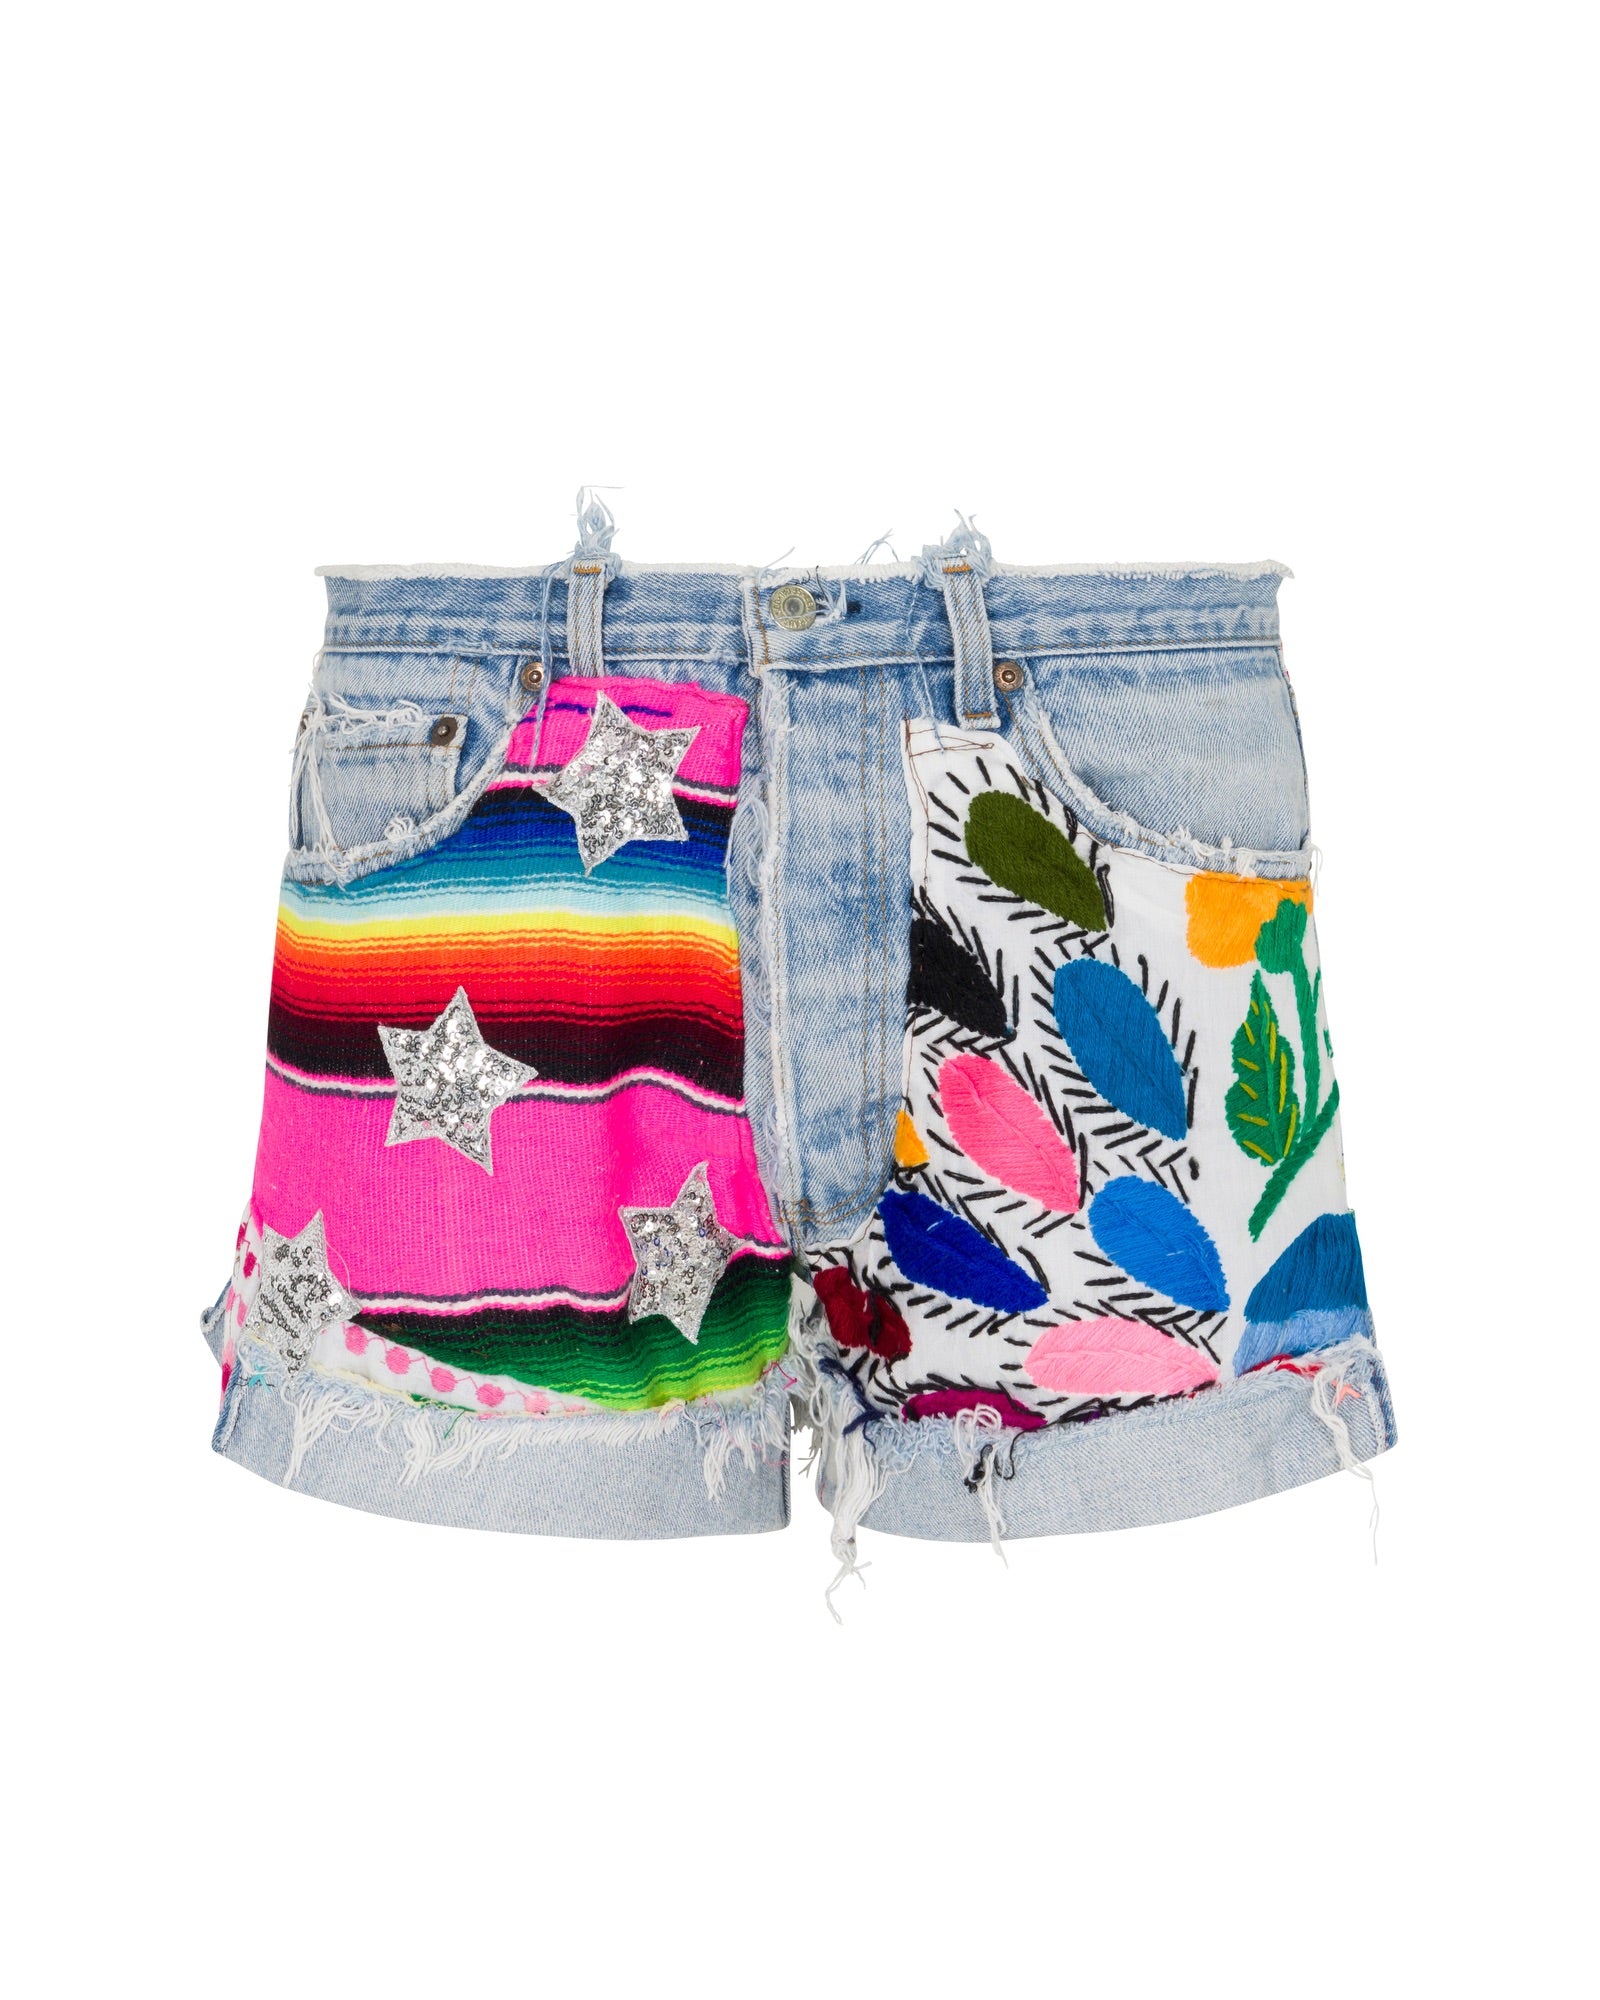 Cali Girl Denim Shorts - Garden Party Glam